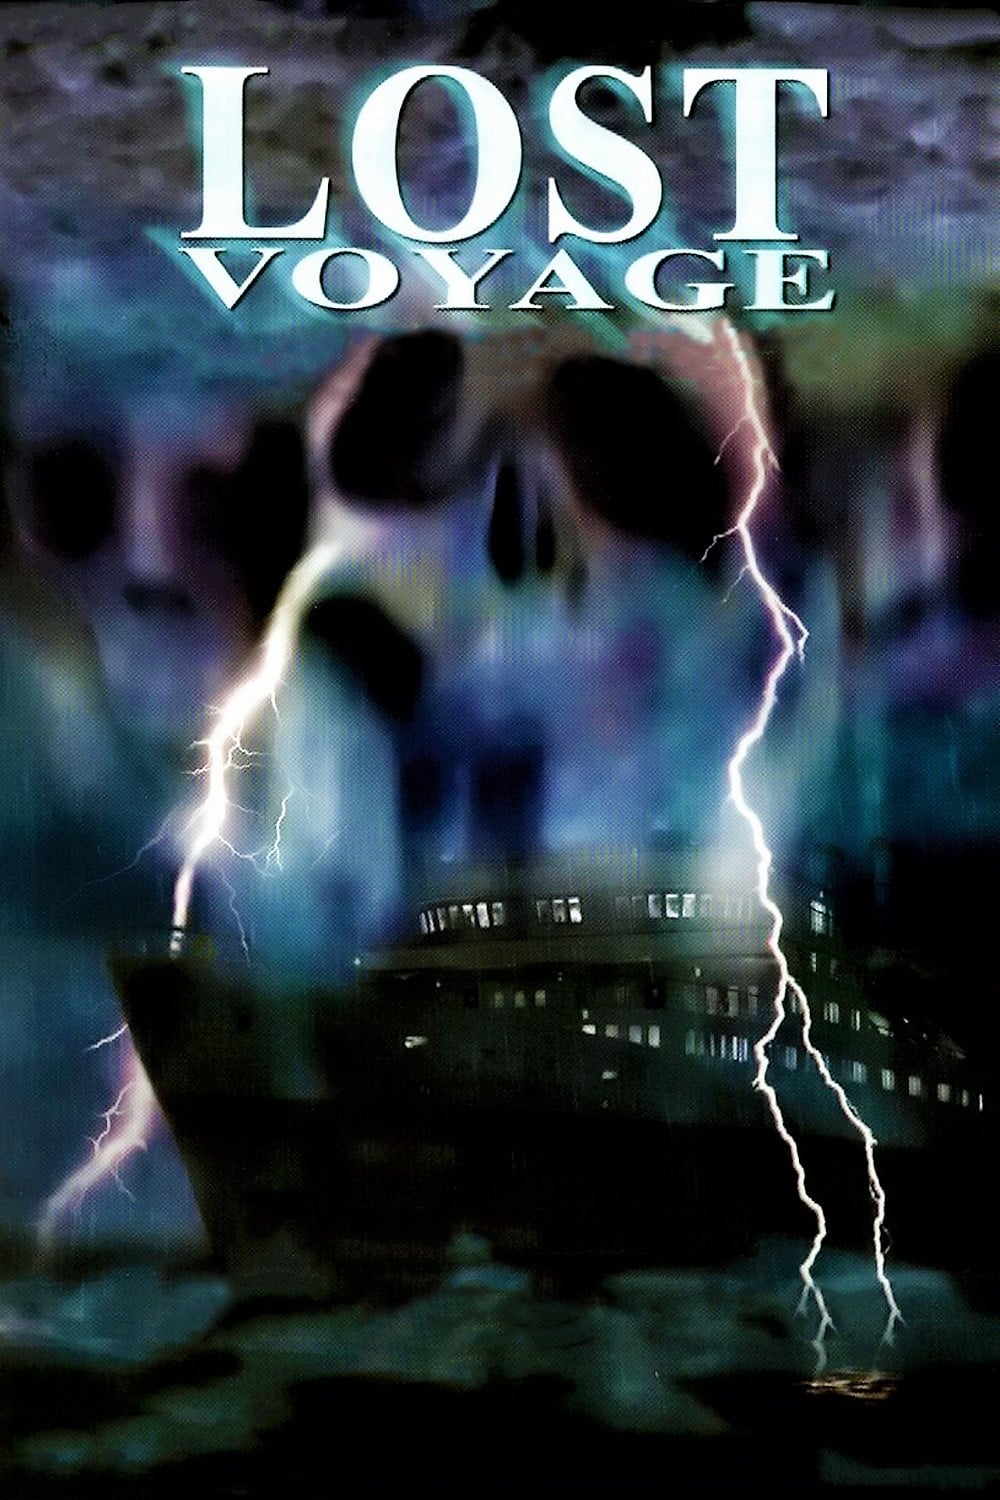 lost voyage movie cast